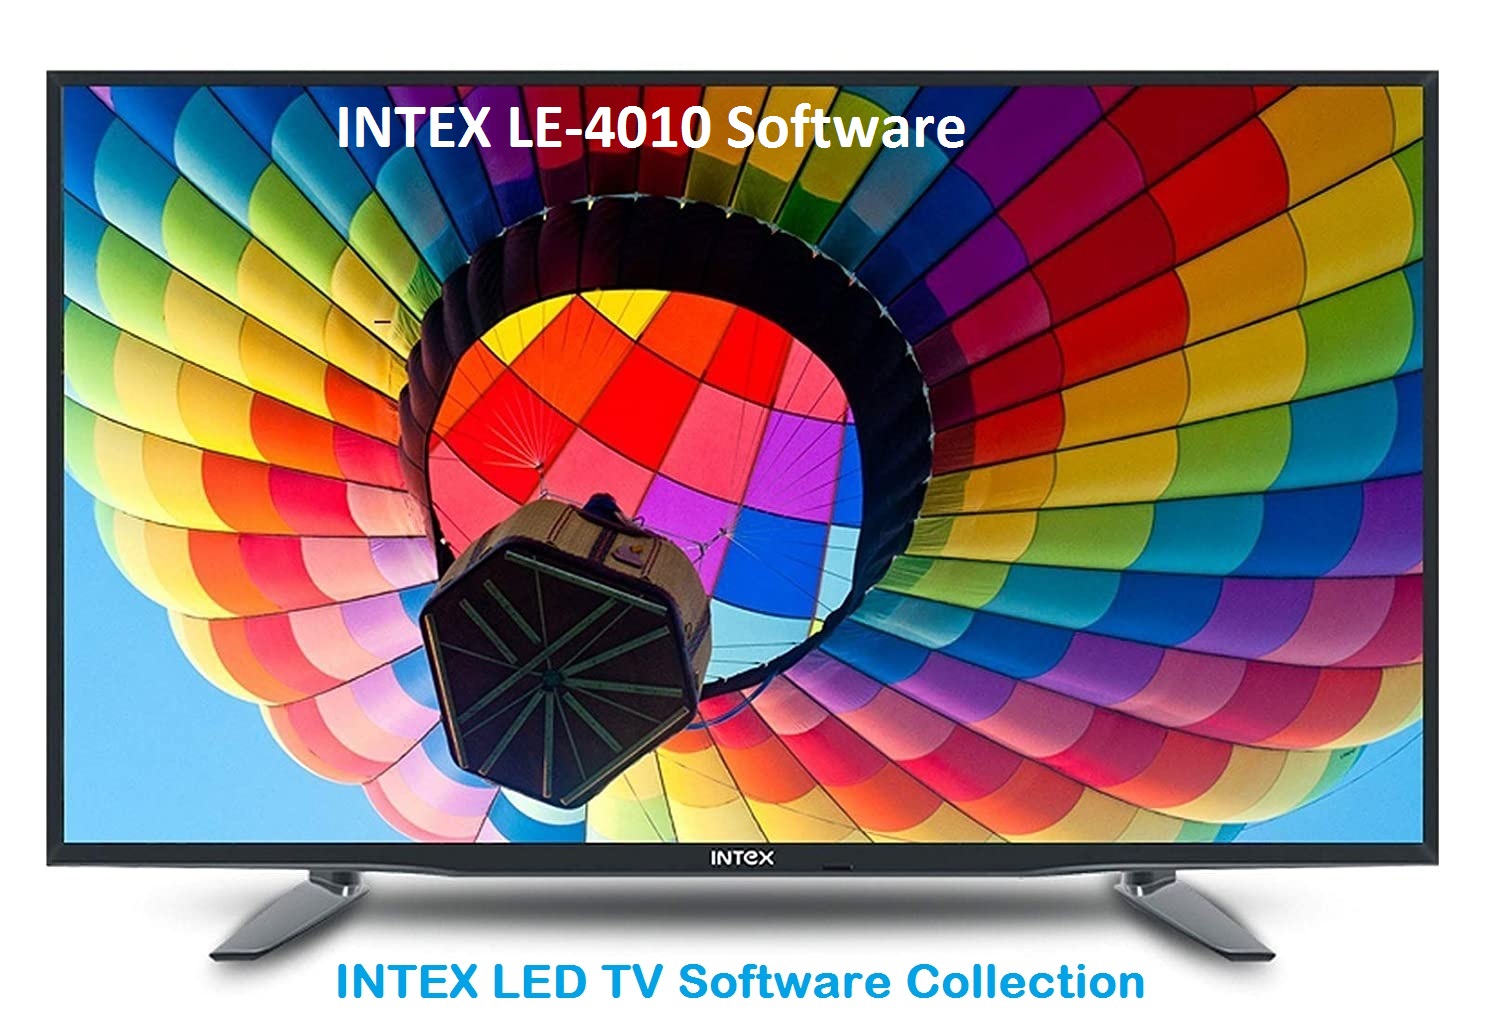 Intex Le-4010